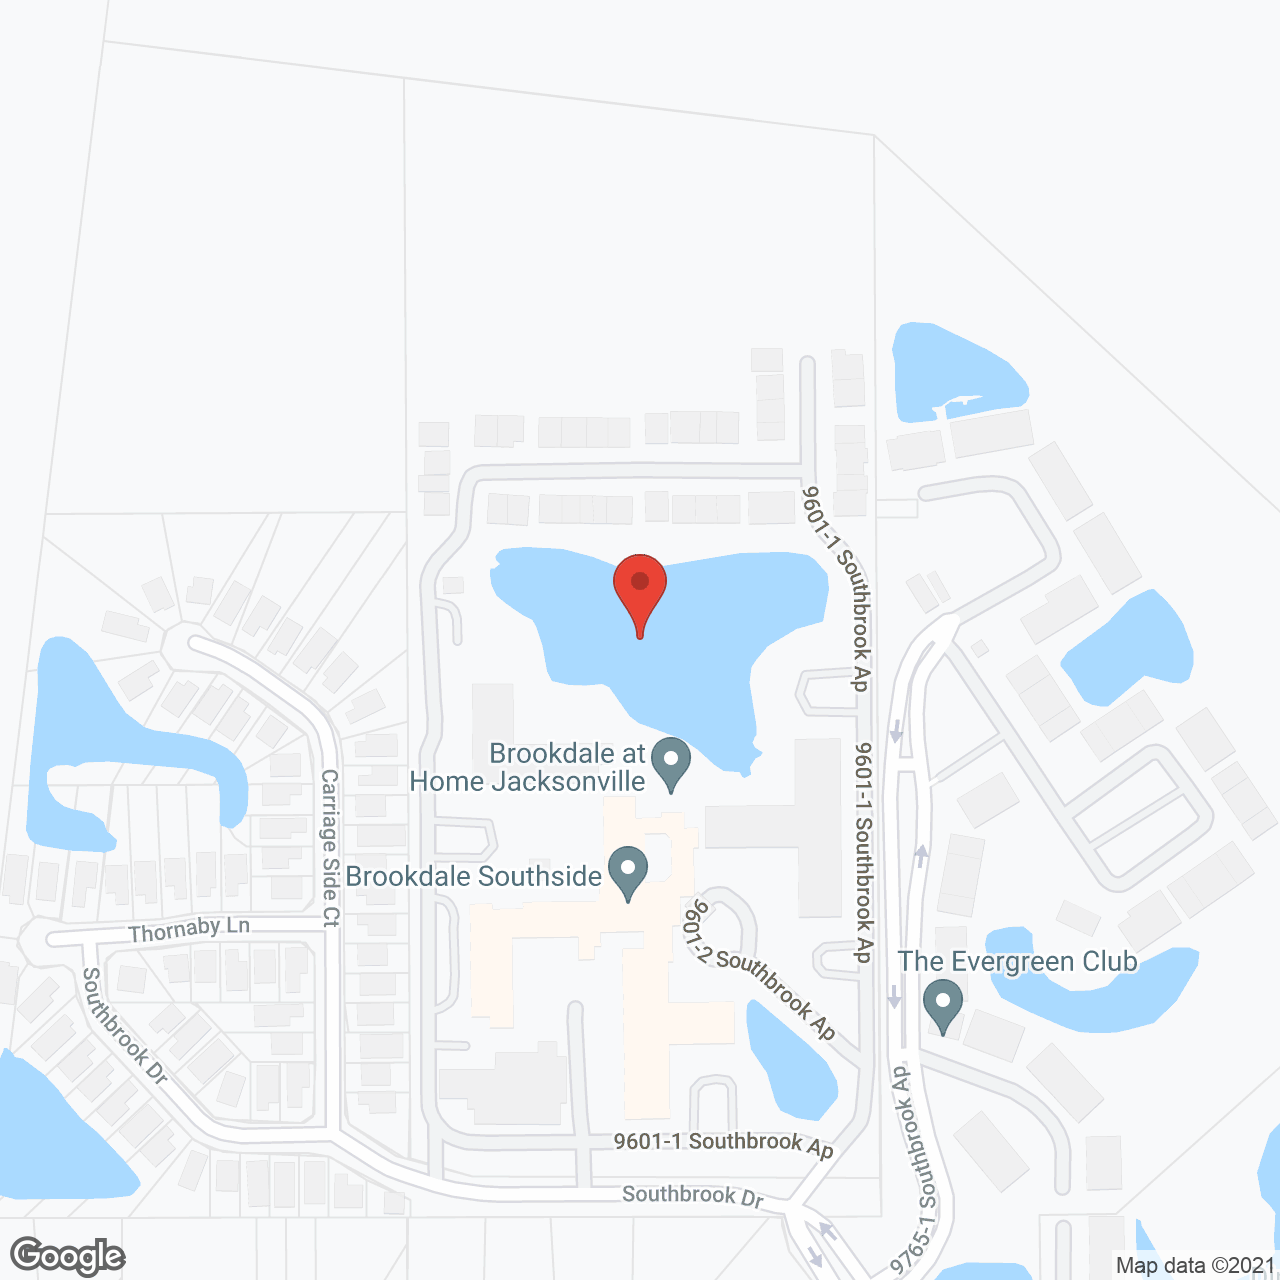 Brookdale Southside in google map